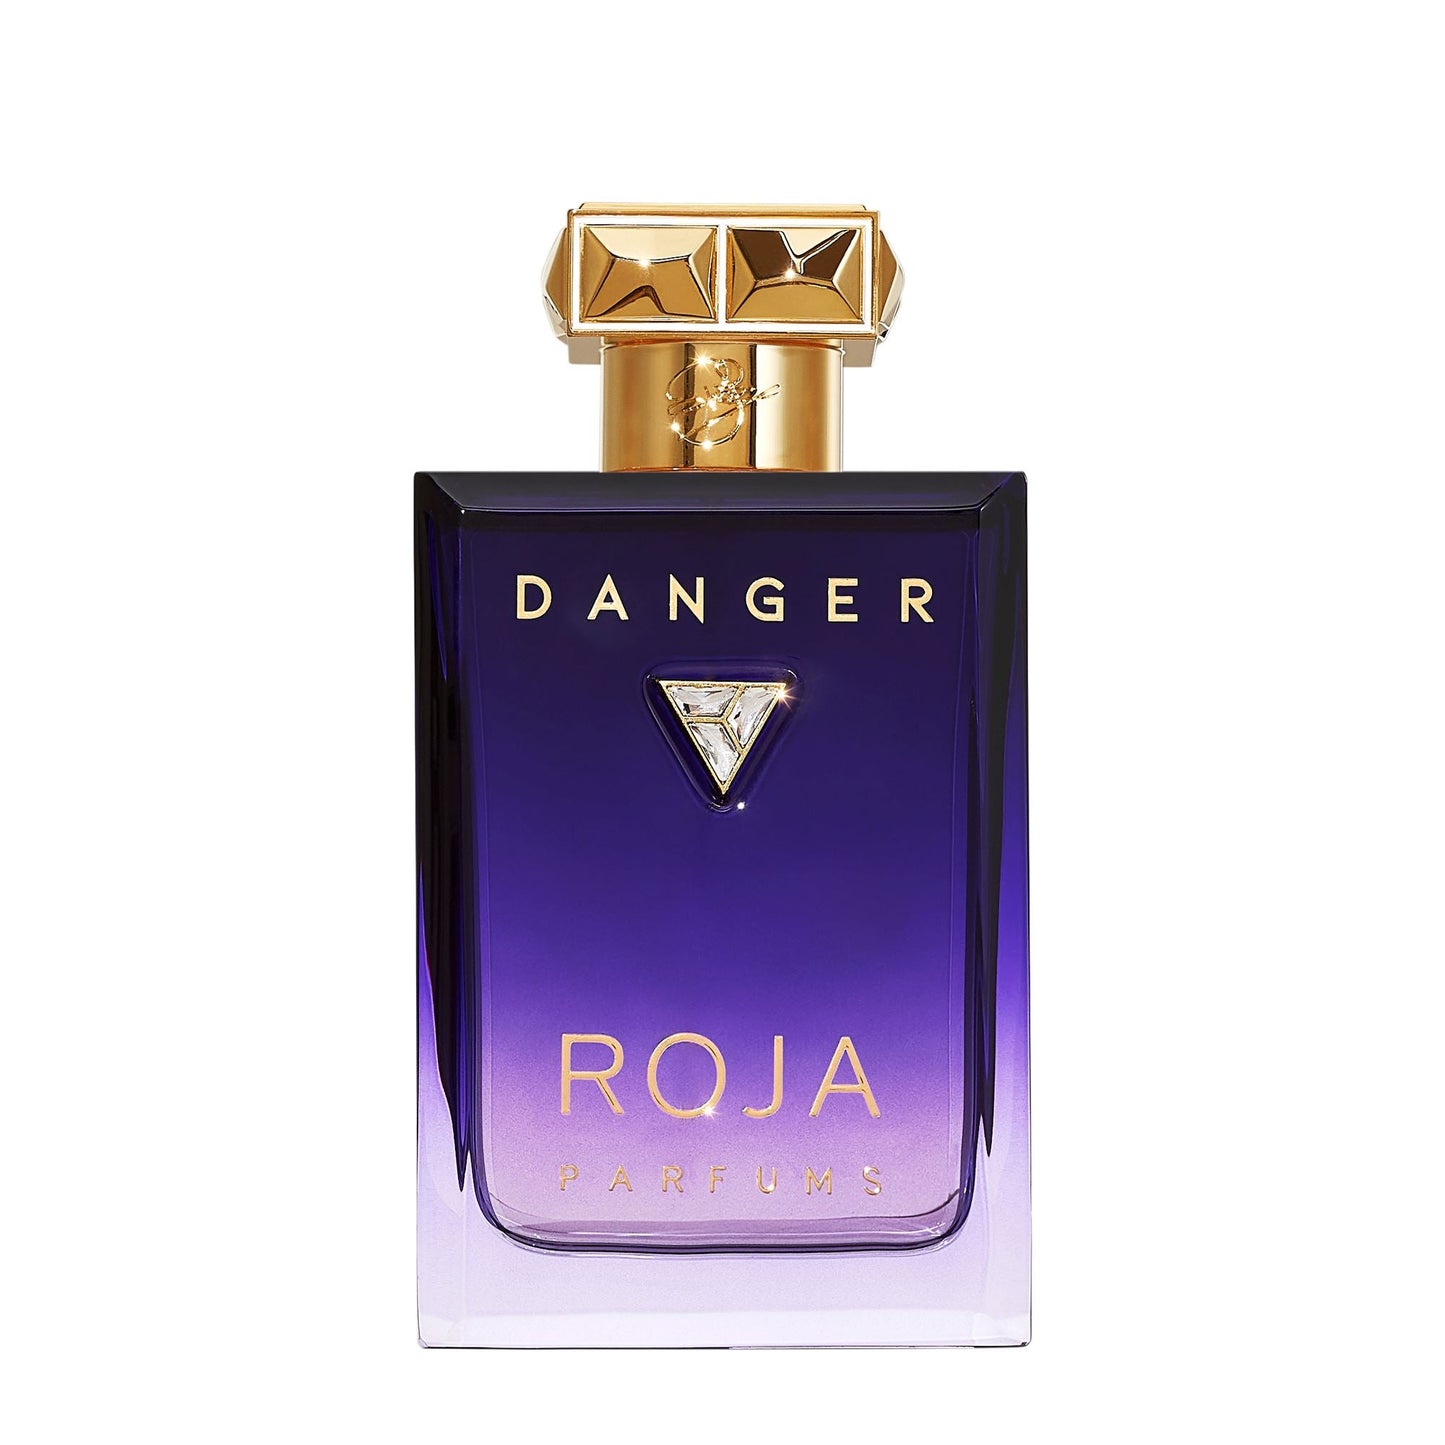 Roja - Danger Essence de Parfum.